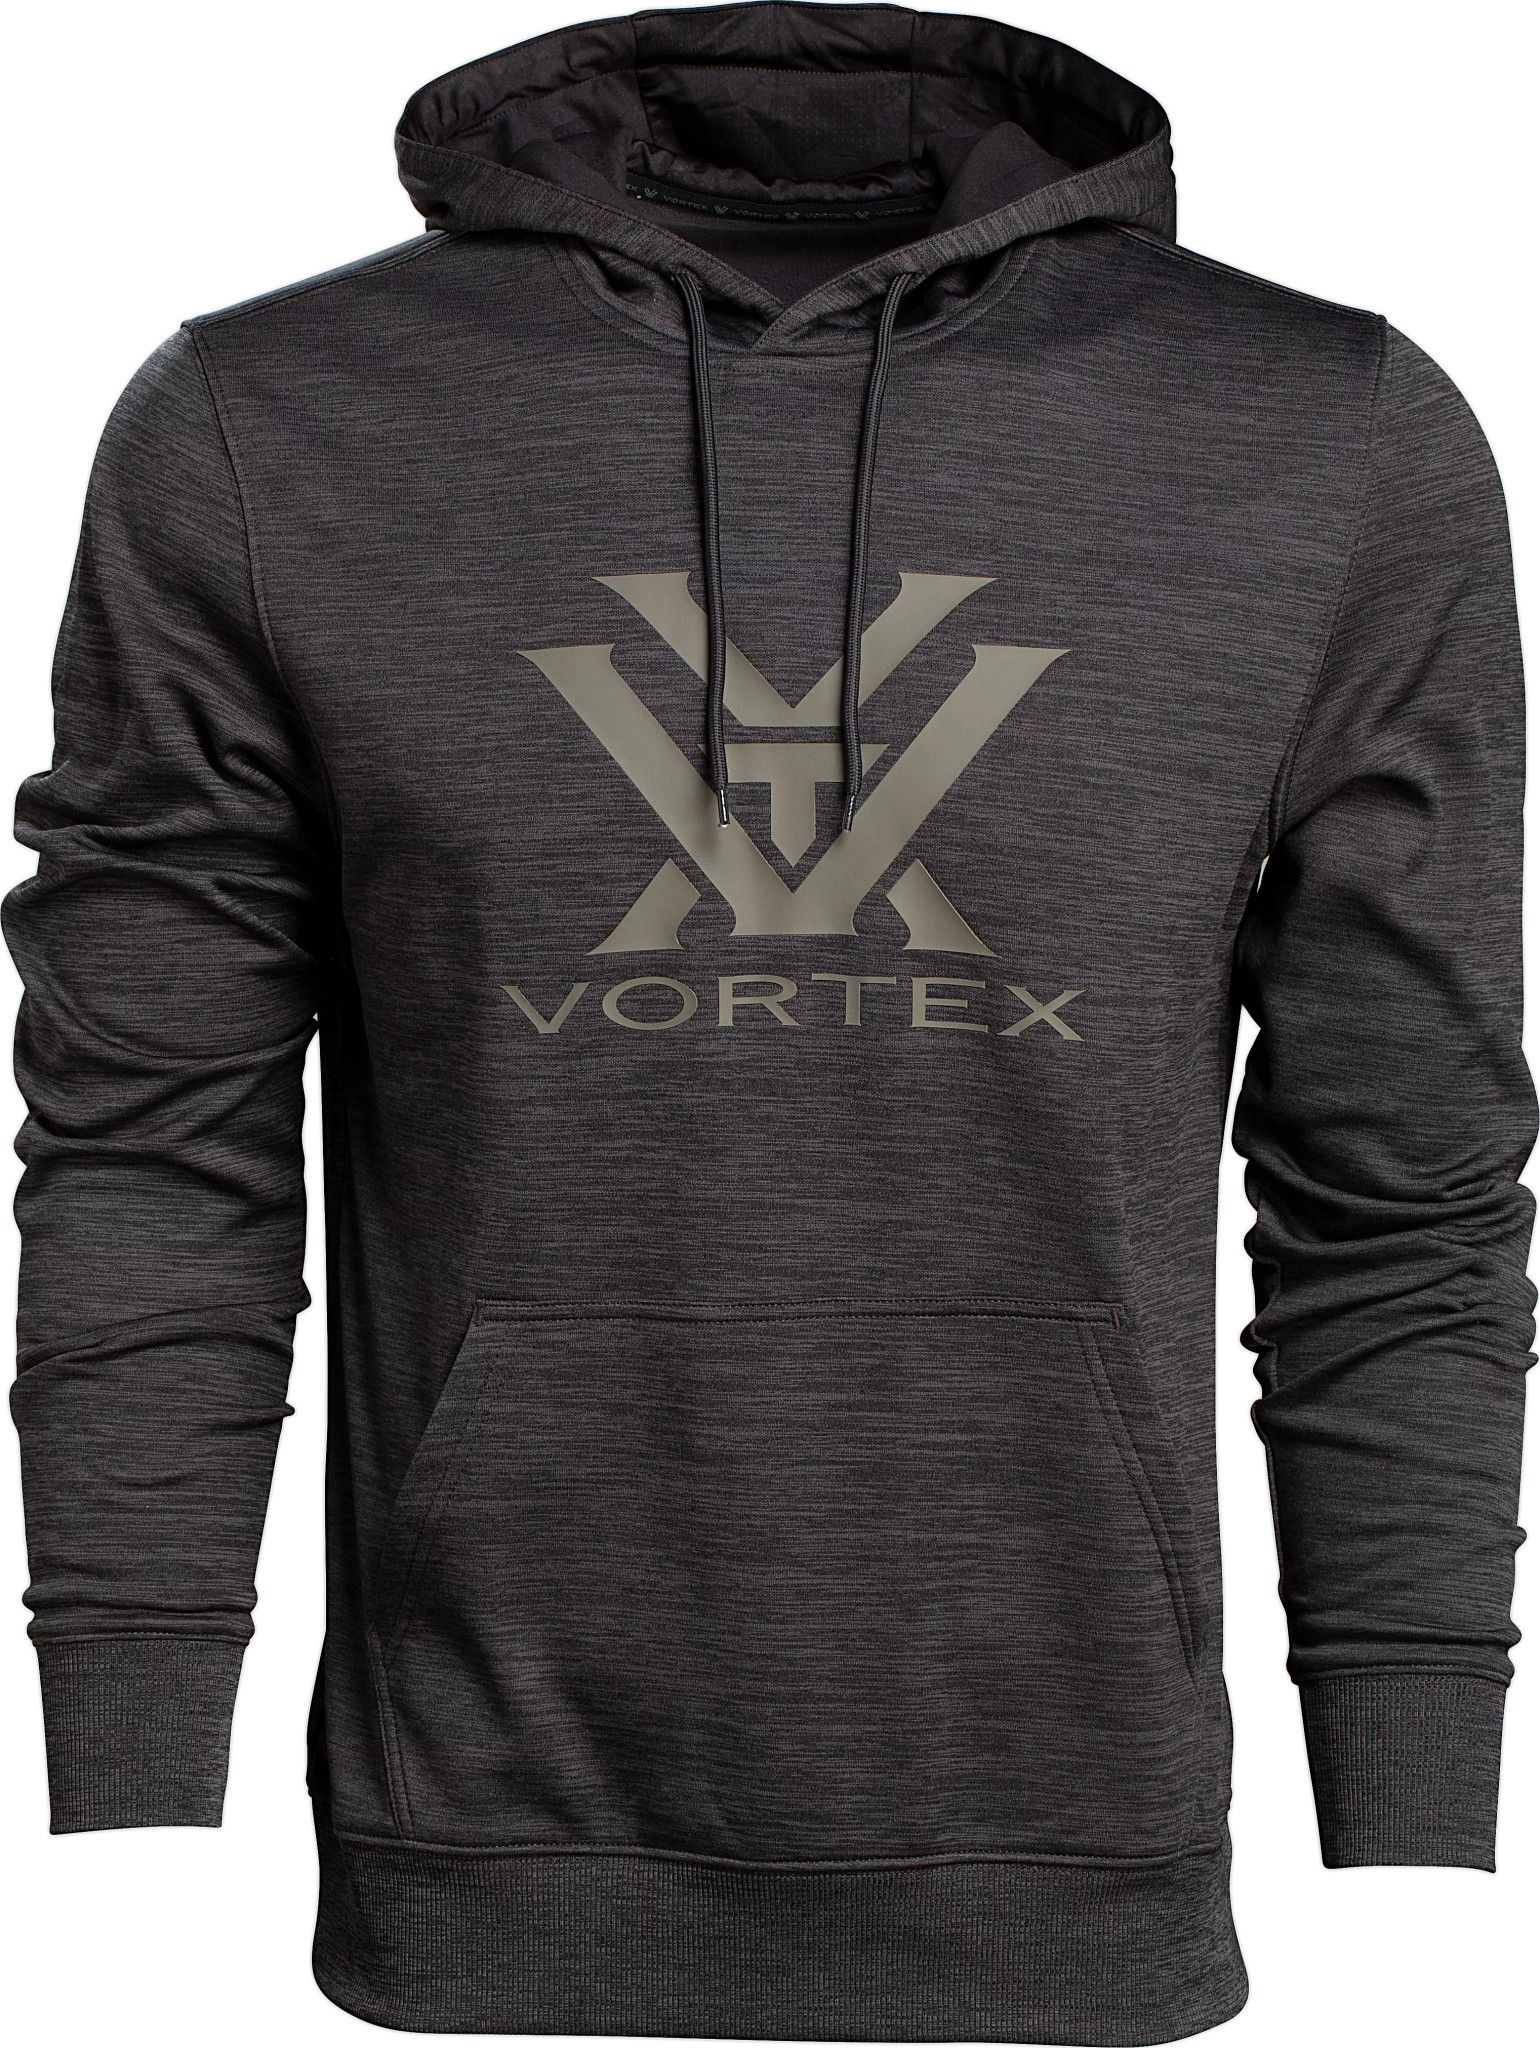 Vortex Optics Performance Hoodies